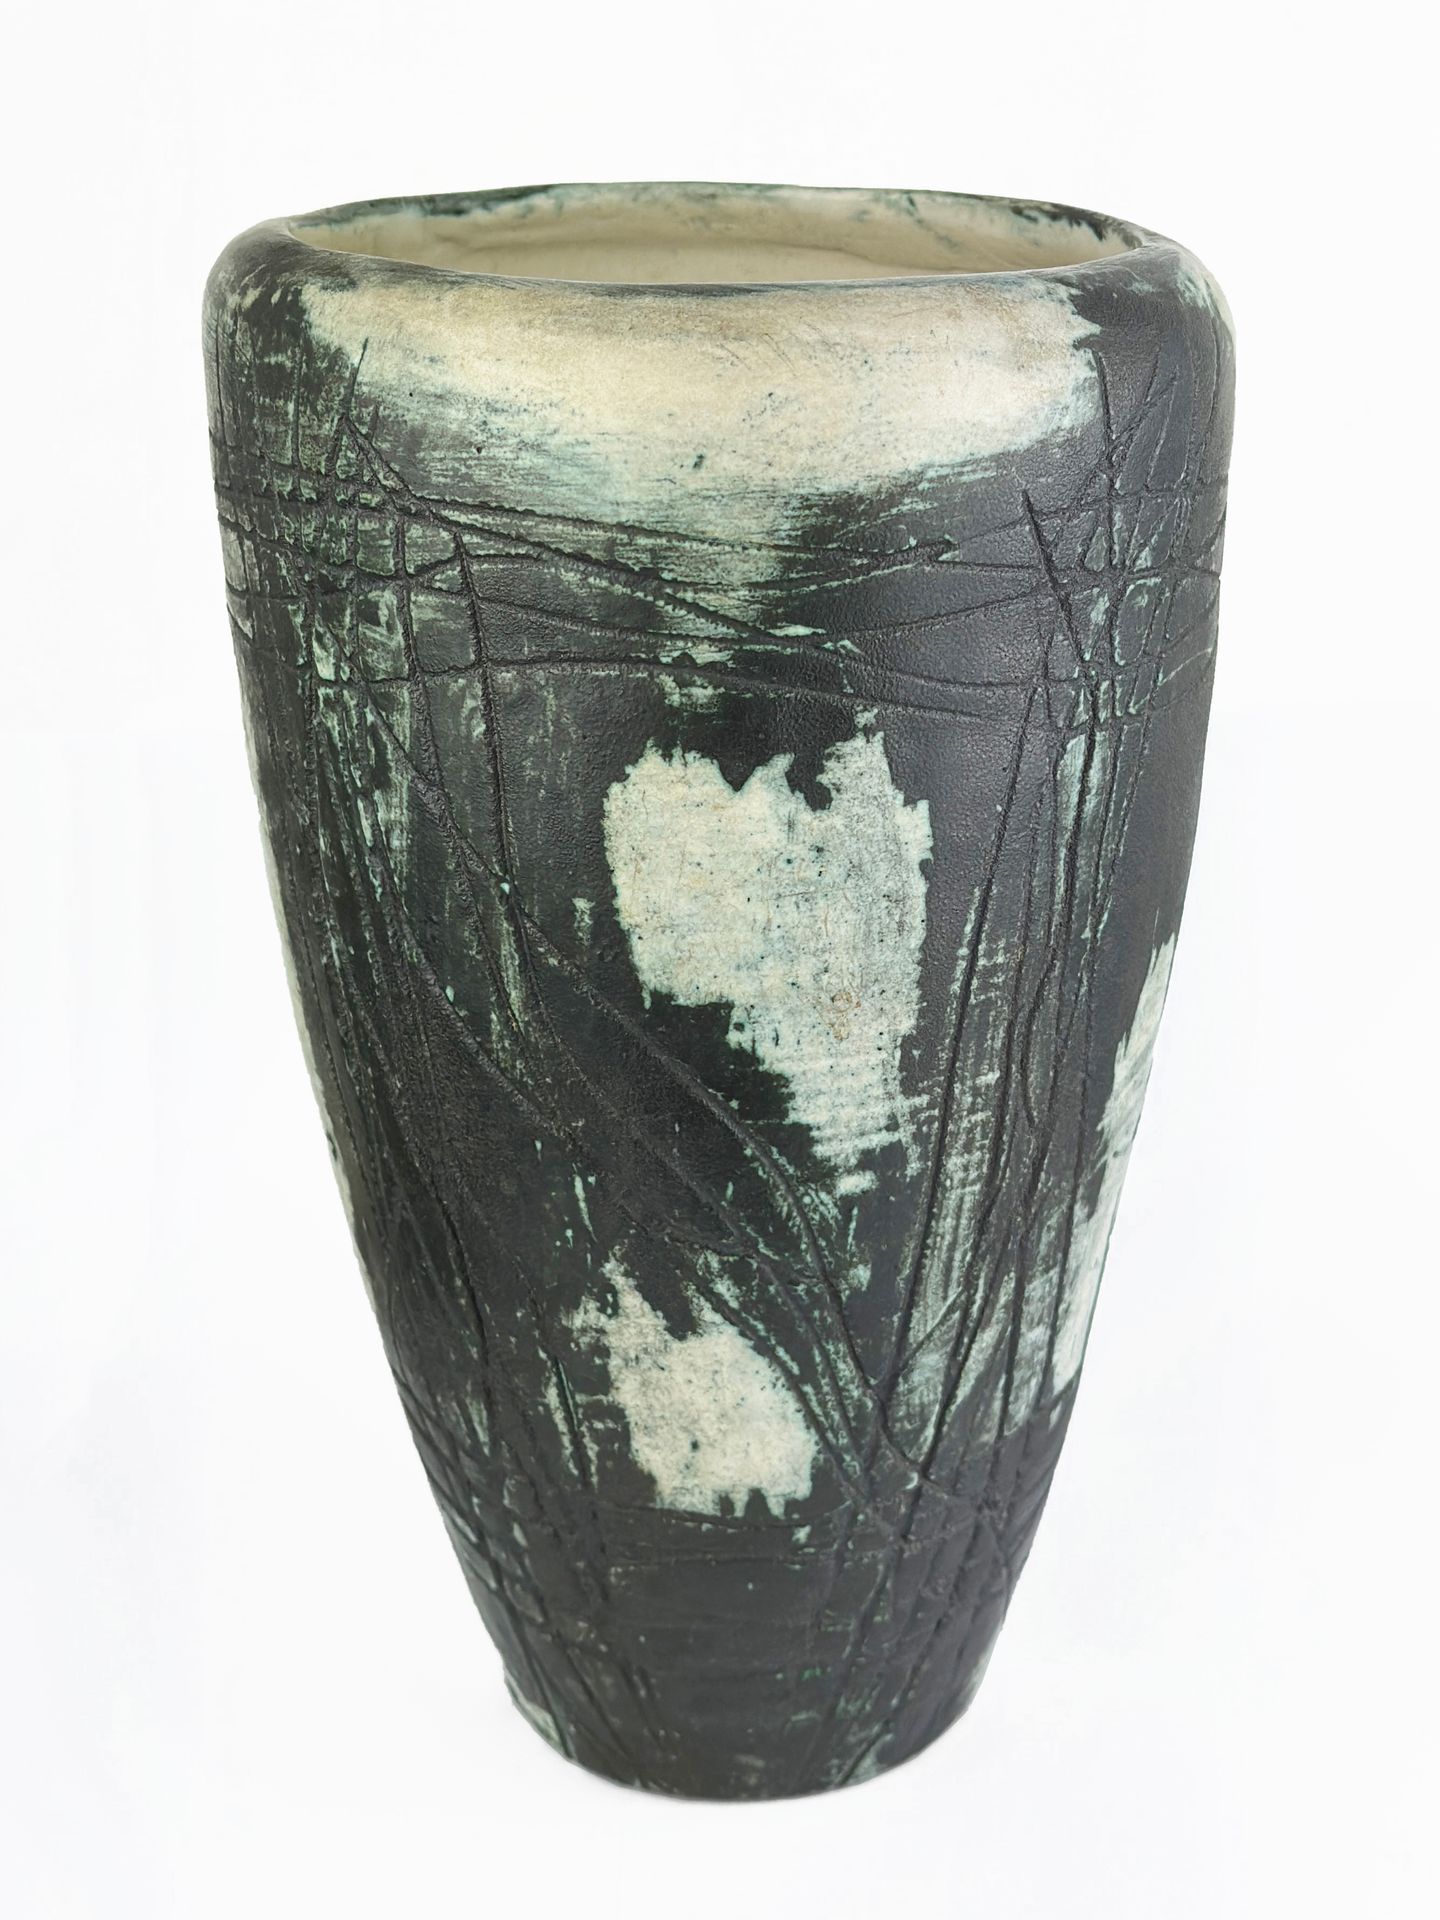 Null Jacques BLIN (1920-1995)
Glazed ceramic vase, predominantly green, decorate&hellip;